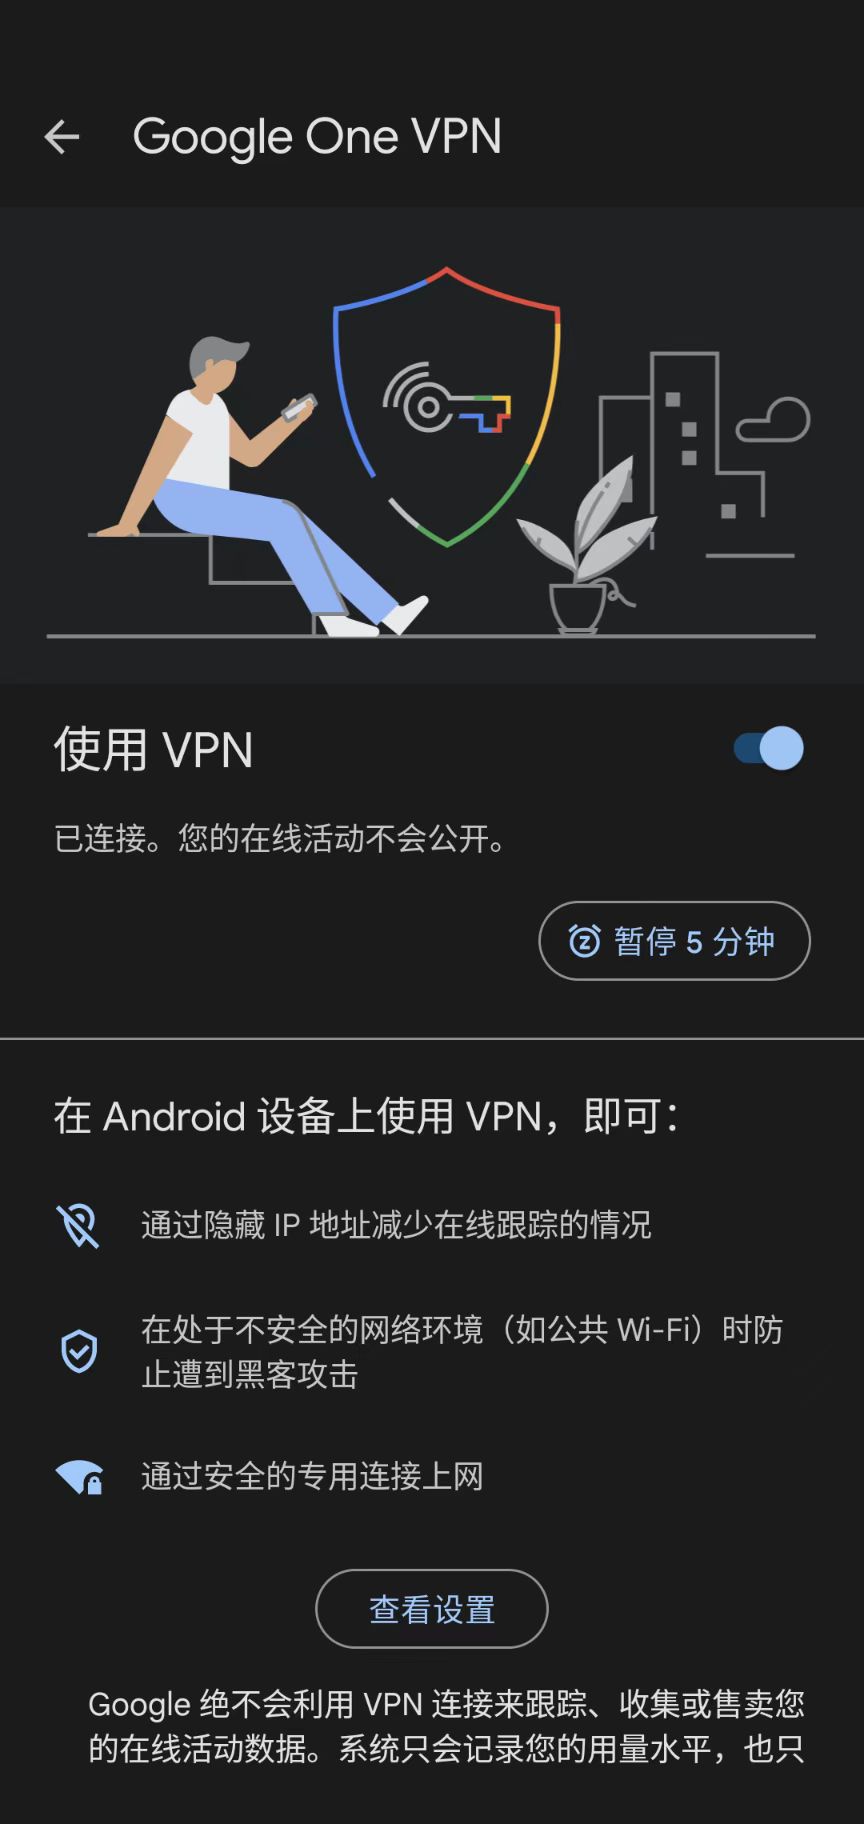 V2EX-Google ONE VPN 折腾记录